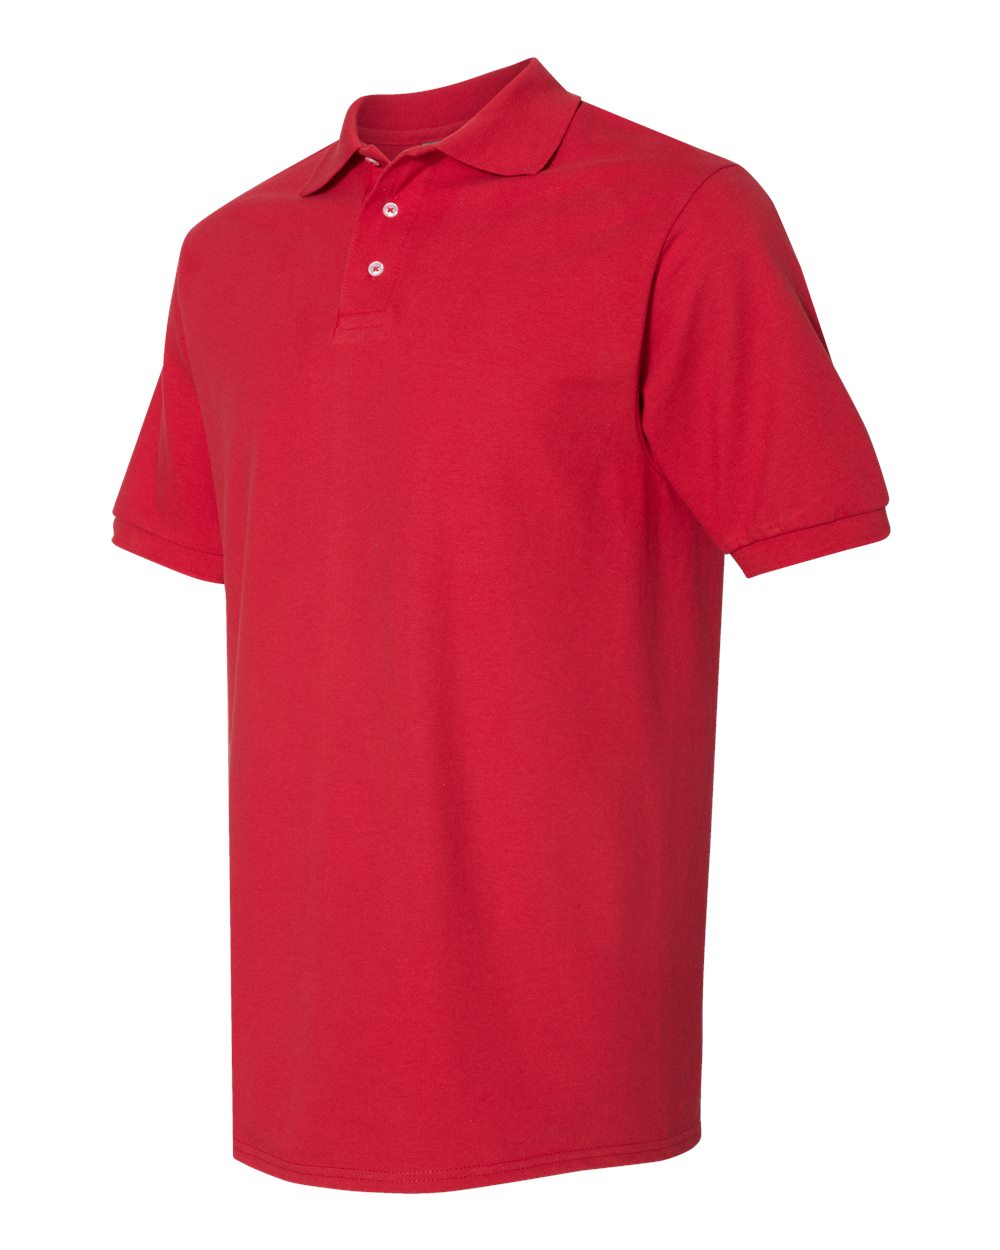 JERZEES 100% Ringspun Cotton Pique Sport Shirt - SHIRT PRINTING 4U